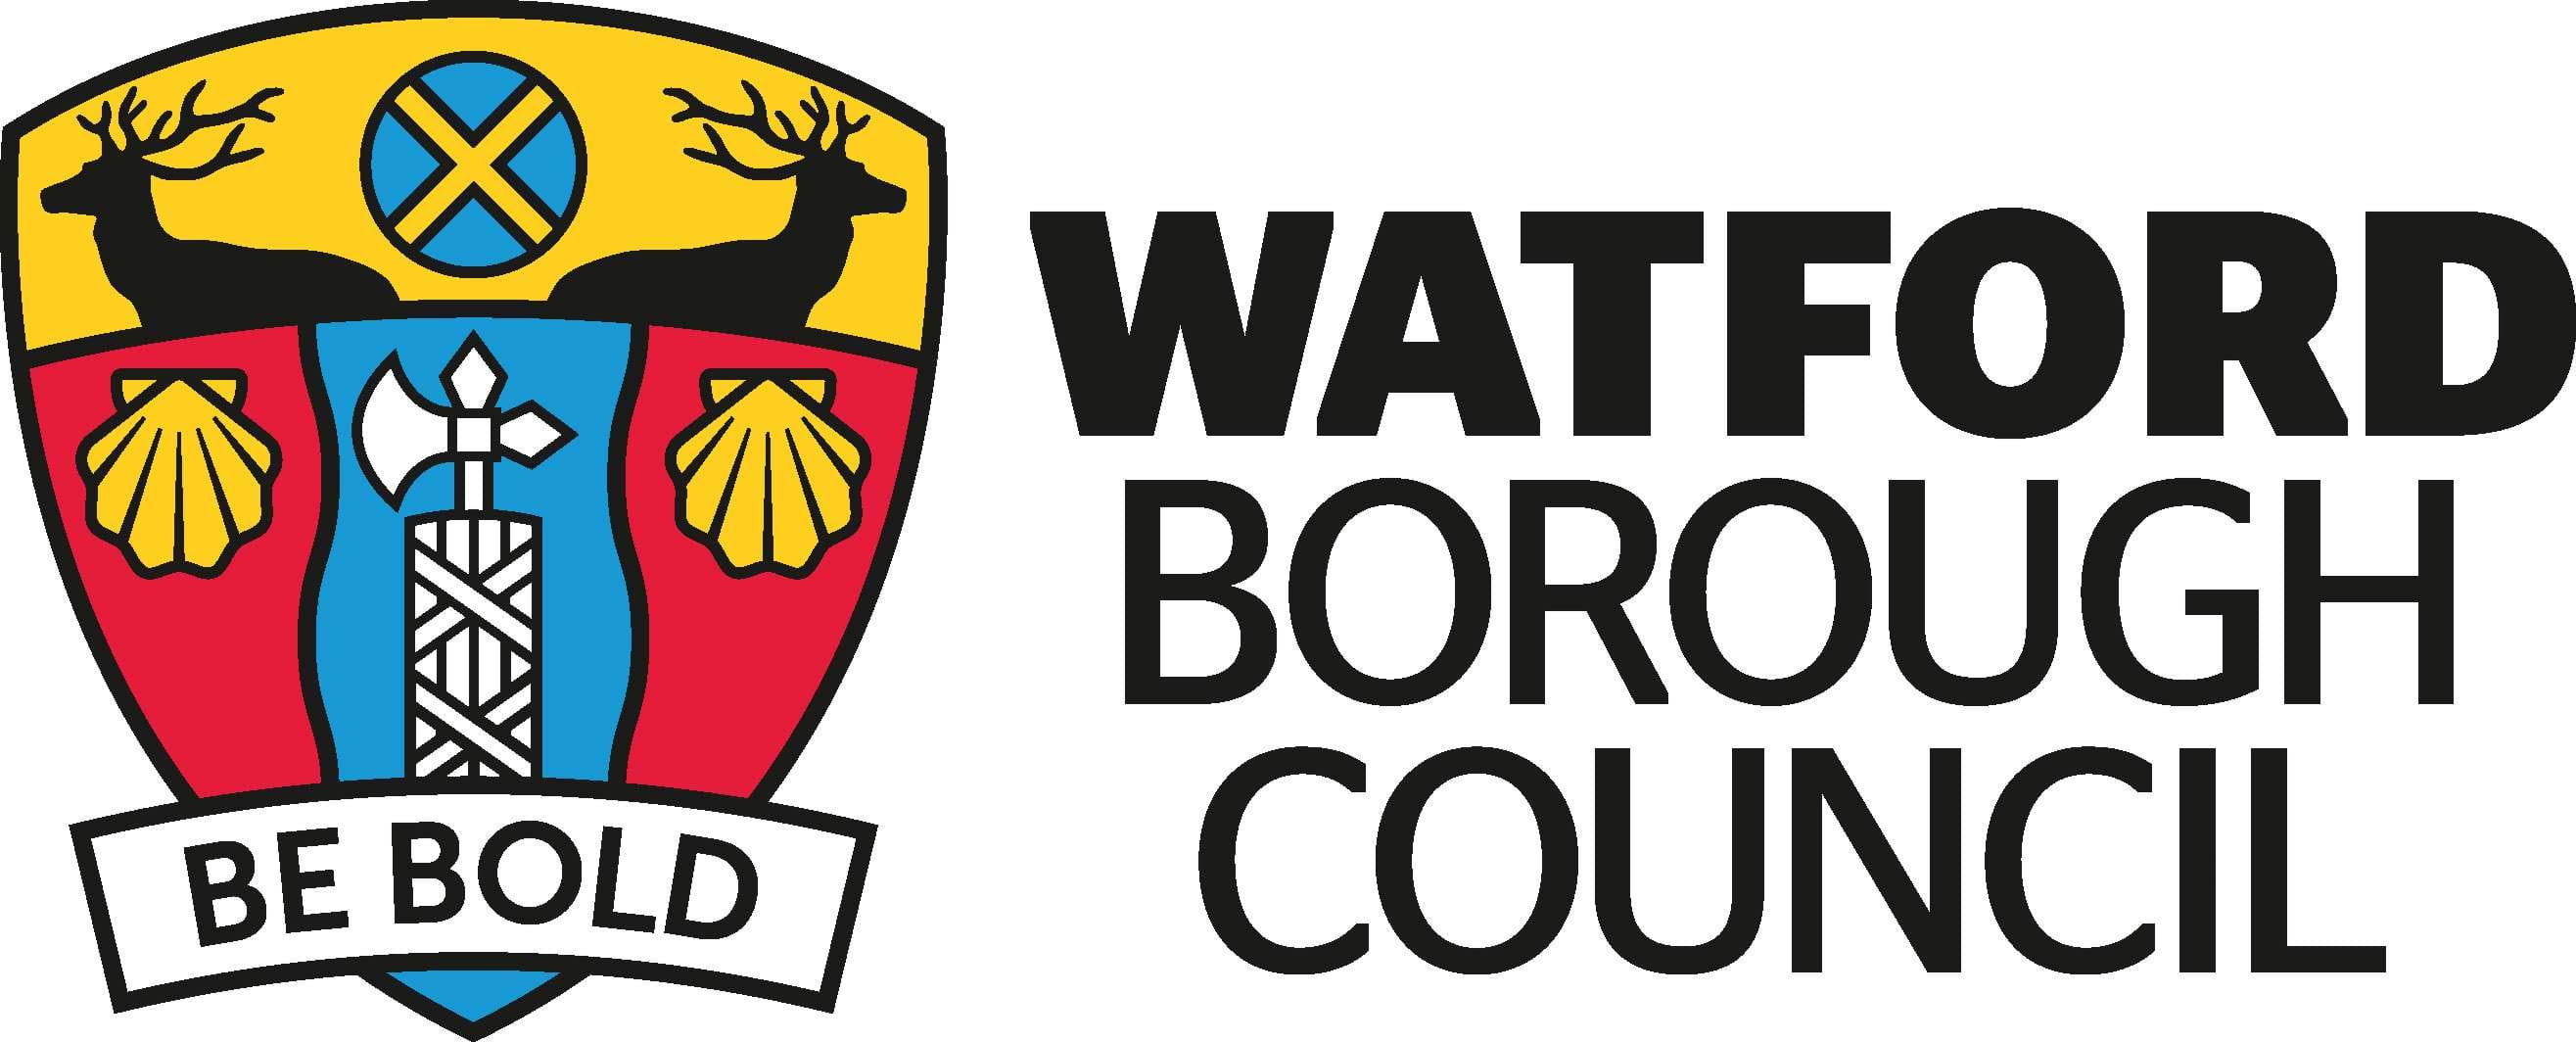 watford-borough-council-logo-new